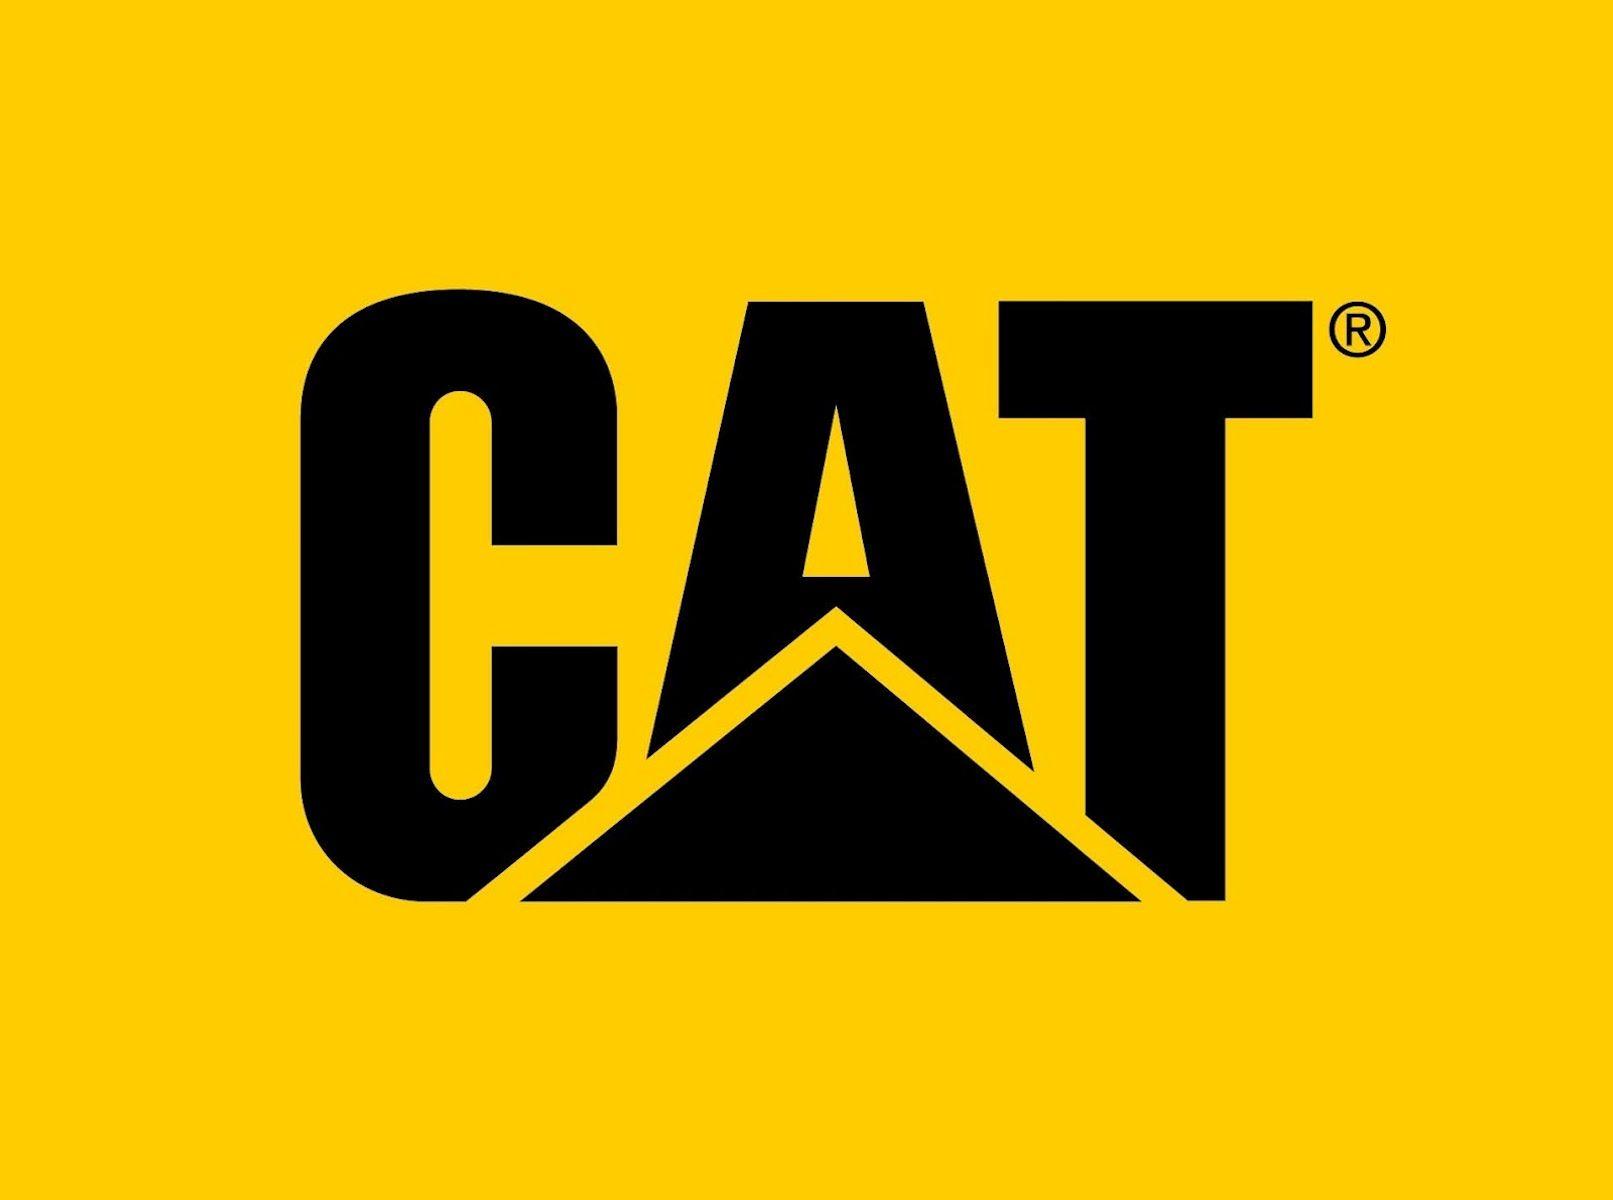 Red Caterpillar Logo - CATerpillar Logo HD Wallpaper. CAT is my career. Logos